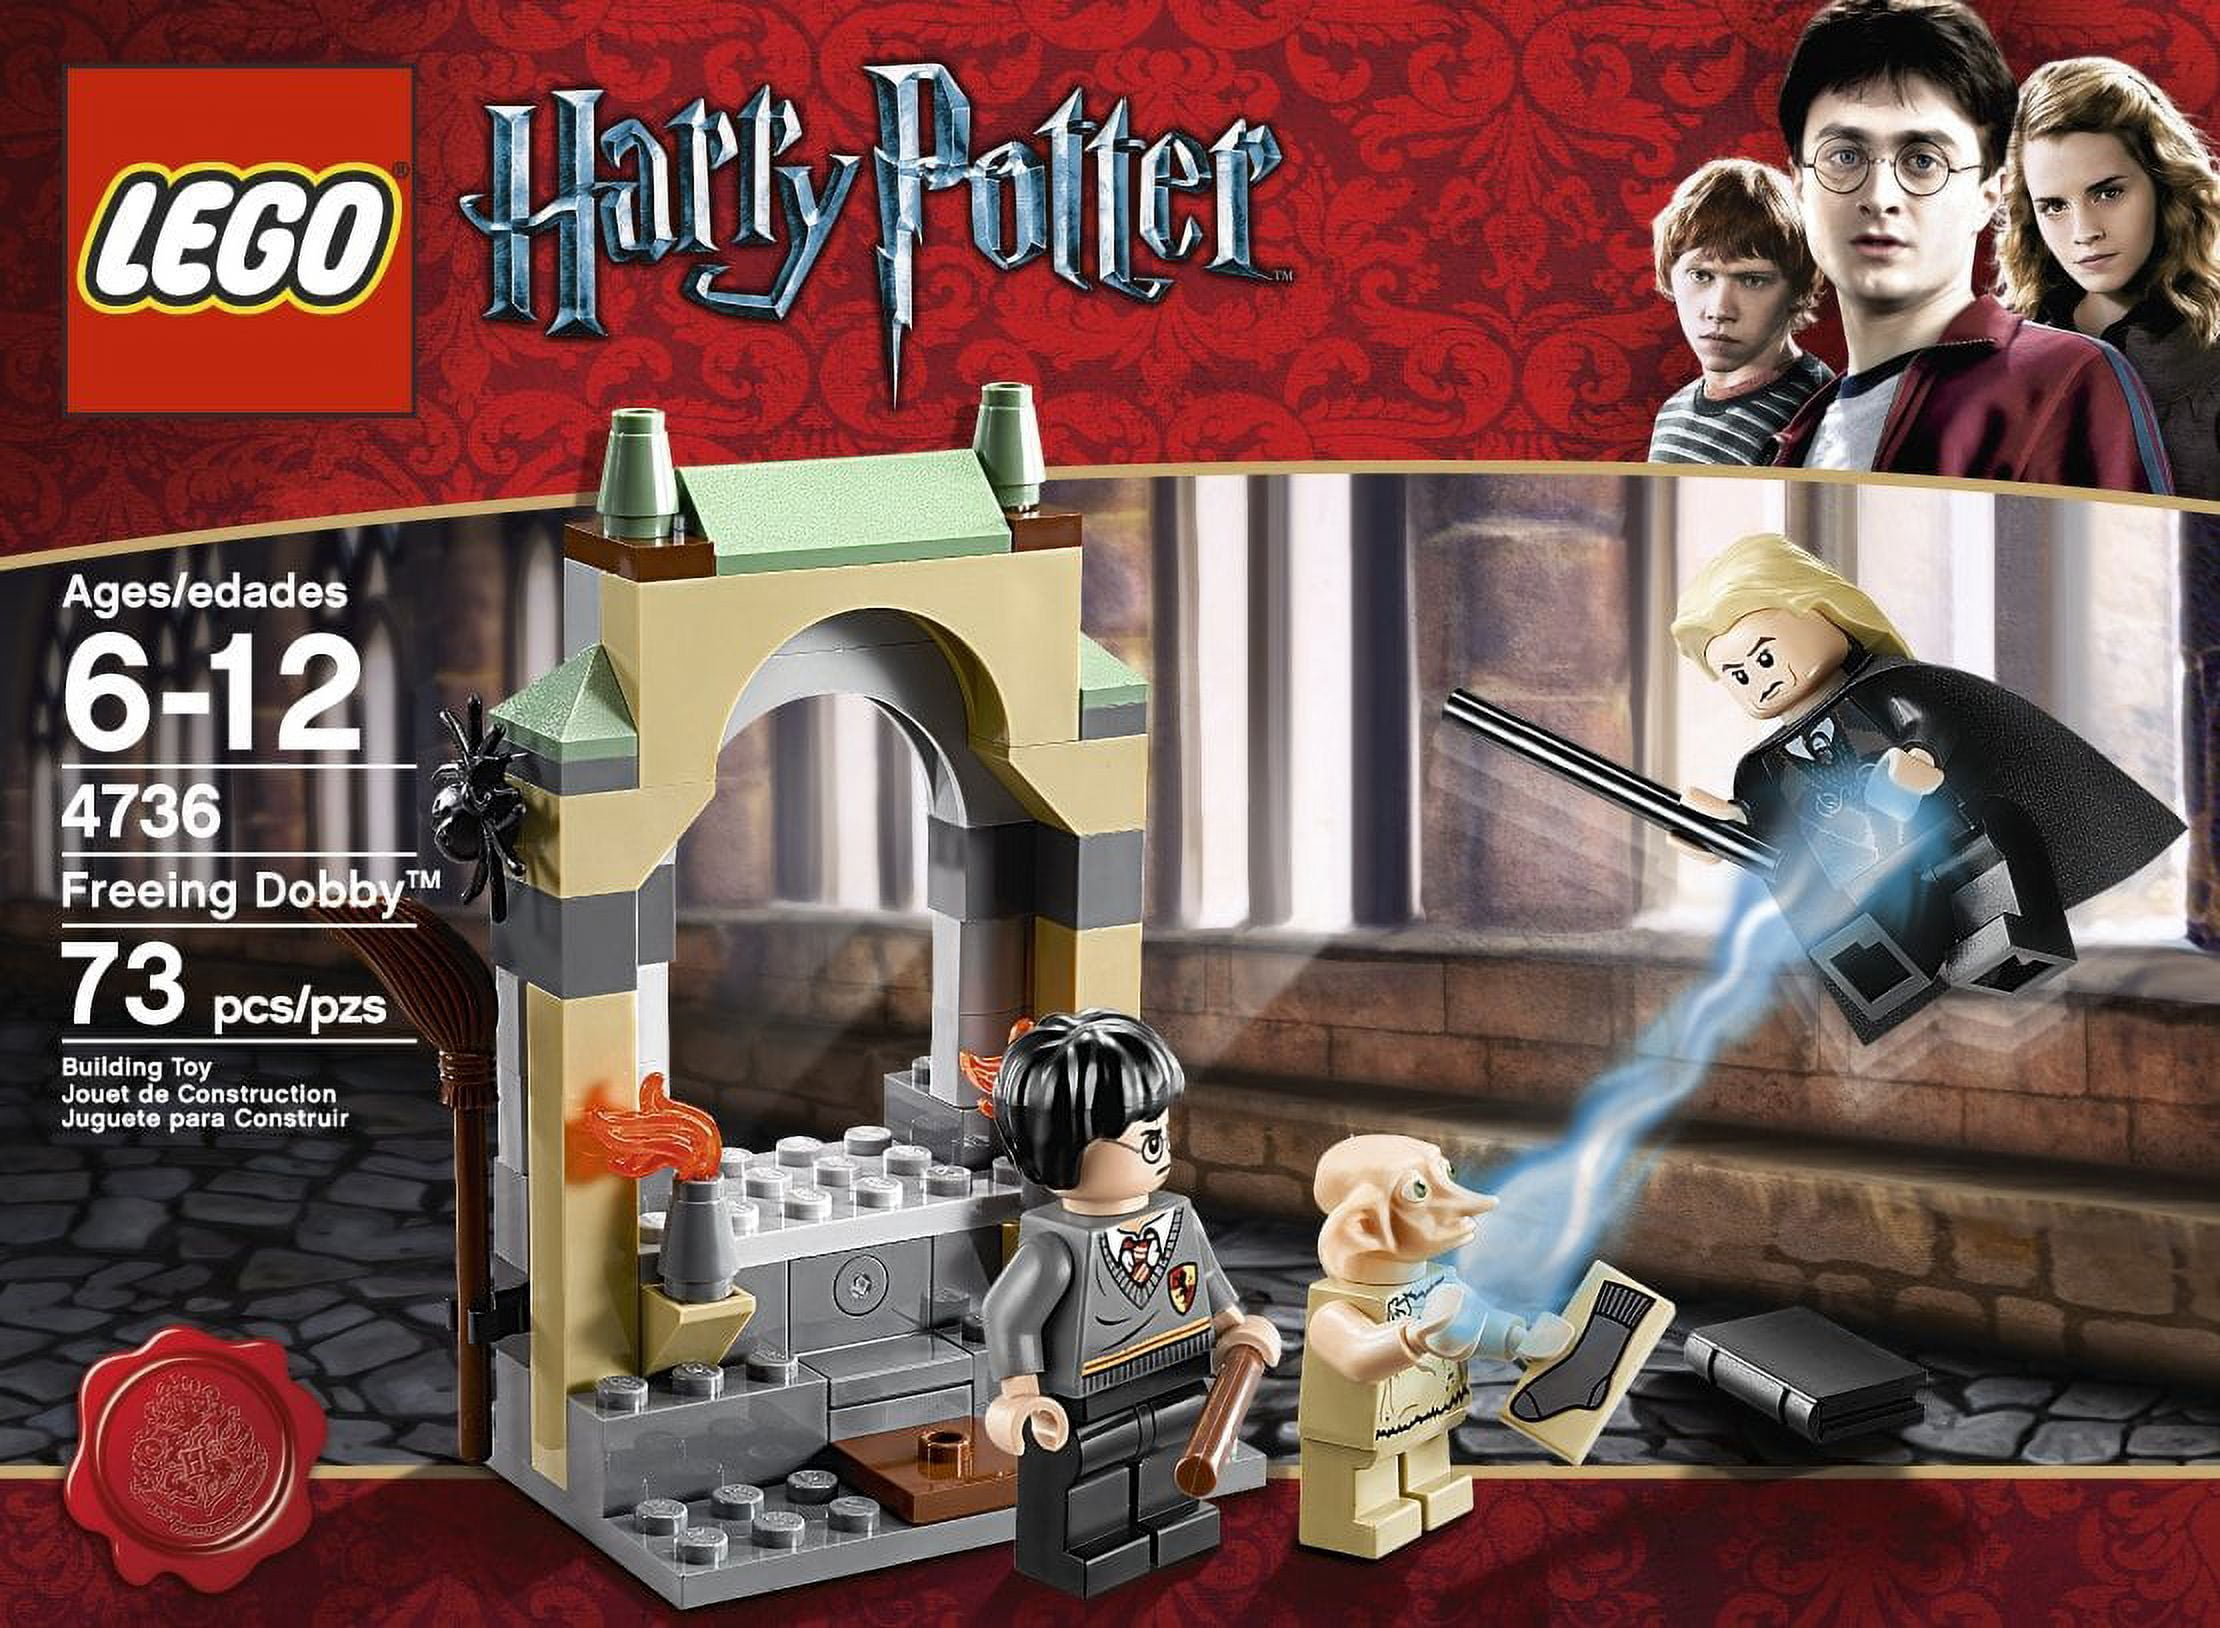 Freeing Dobby - LEGO set #4736-1 (Building Sets > Harry Potter)